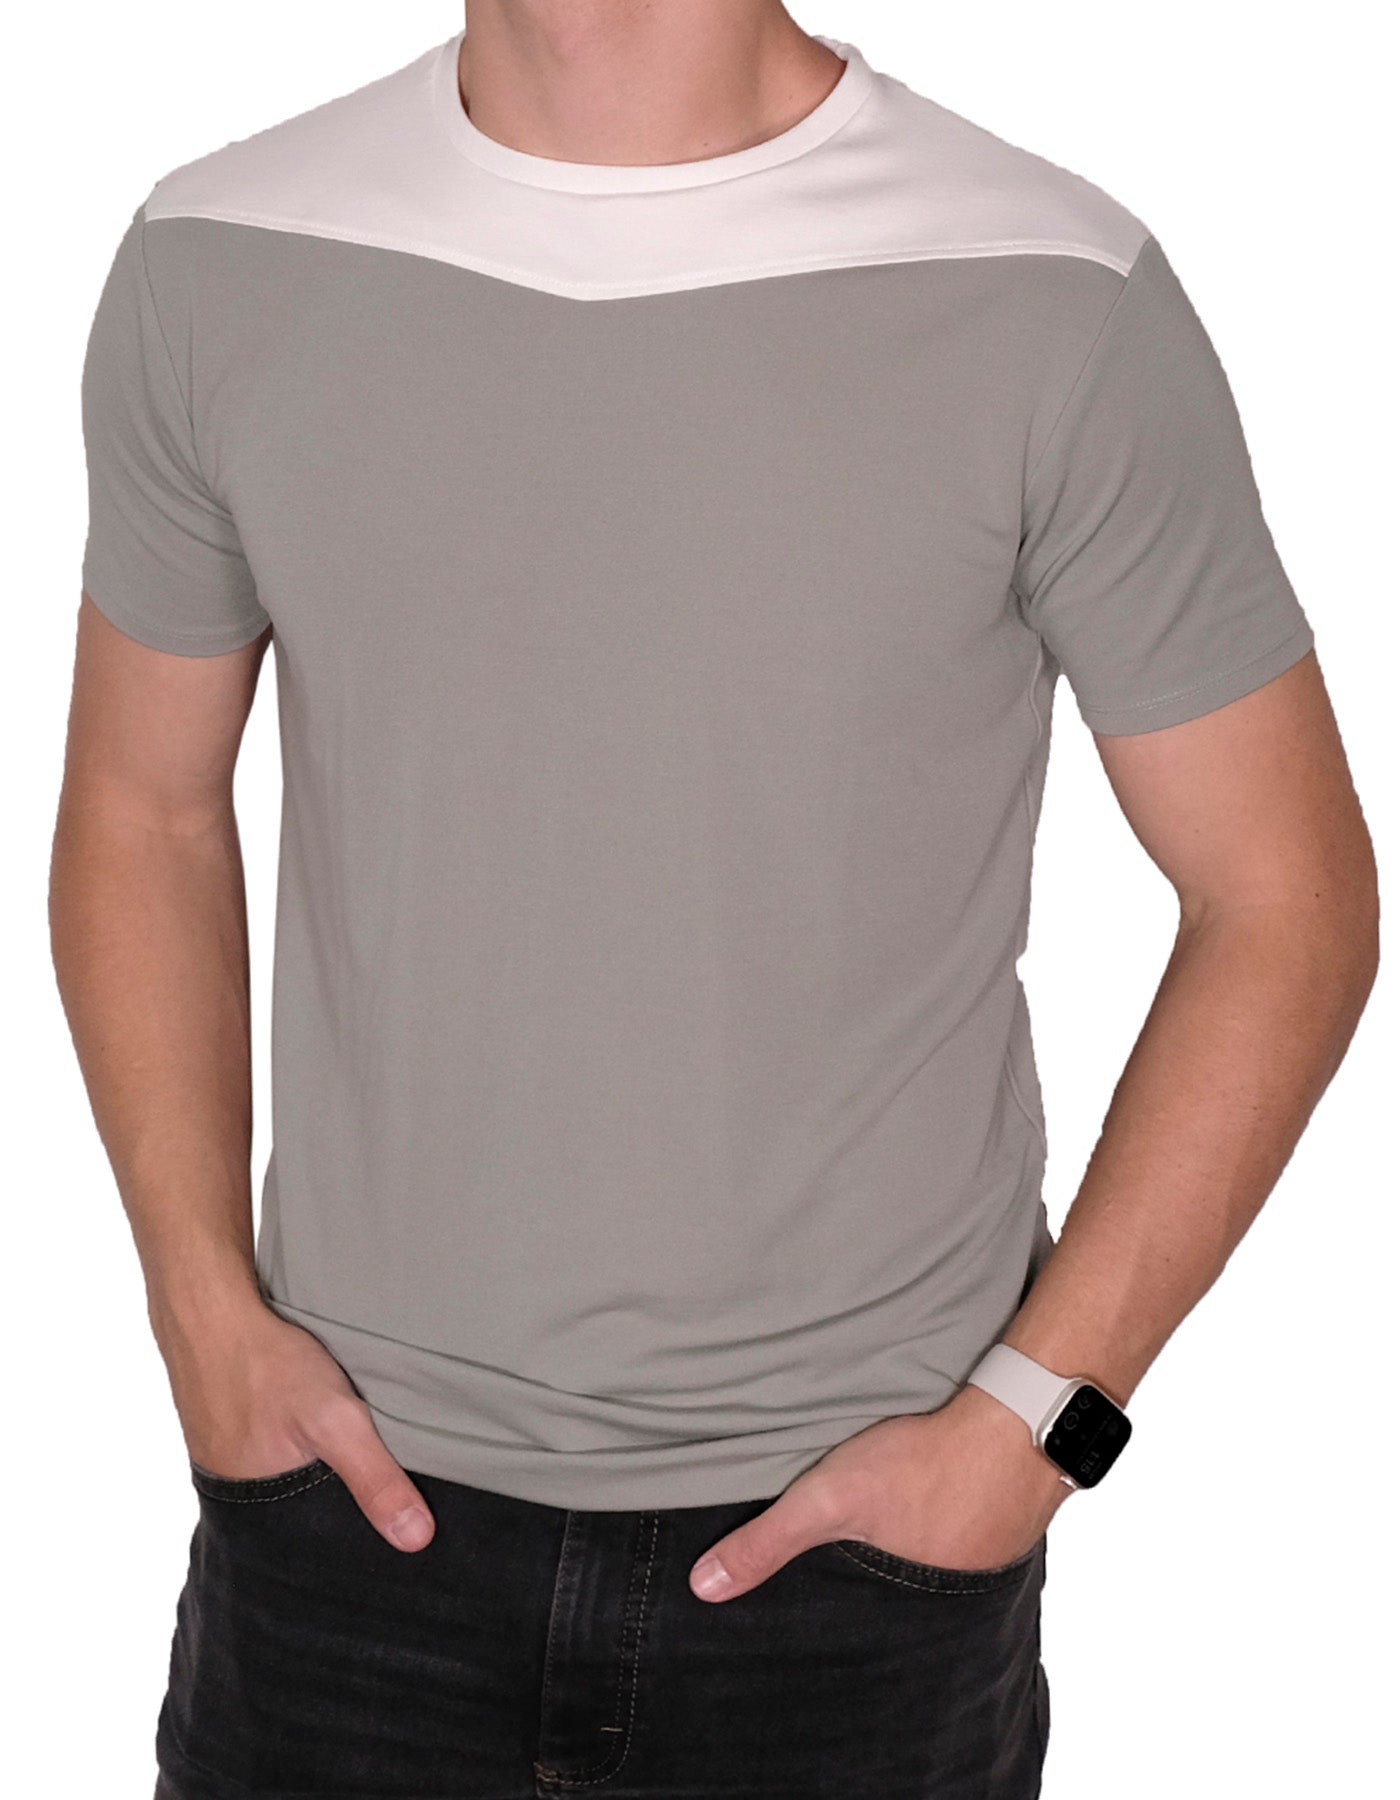 Men's Crewneck Collar Casual T-Shirt in Earthtones for Shoulder Appeal